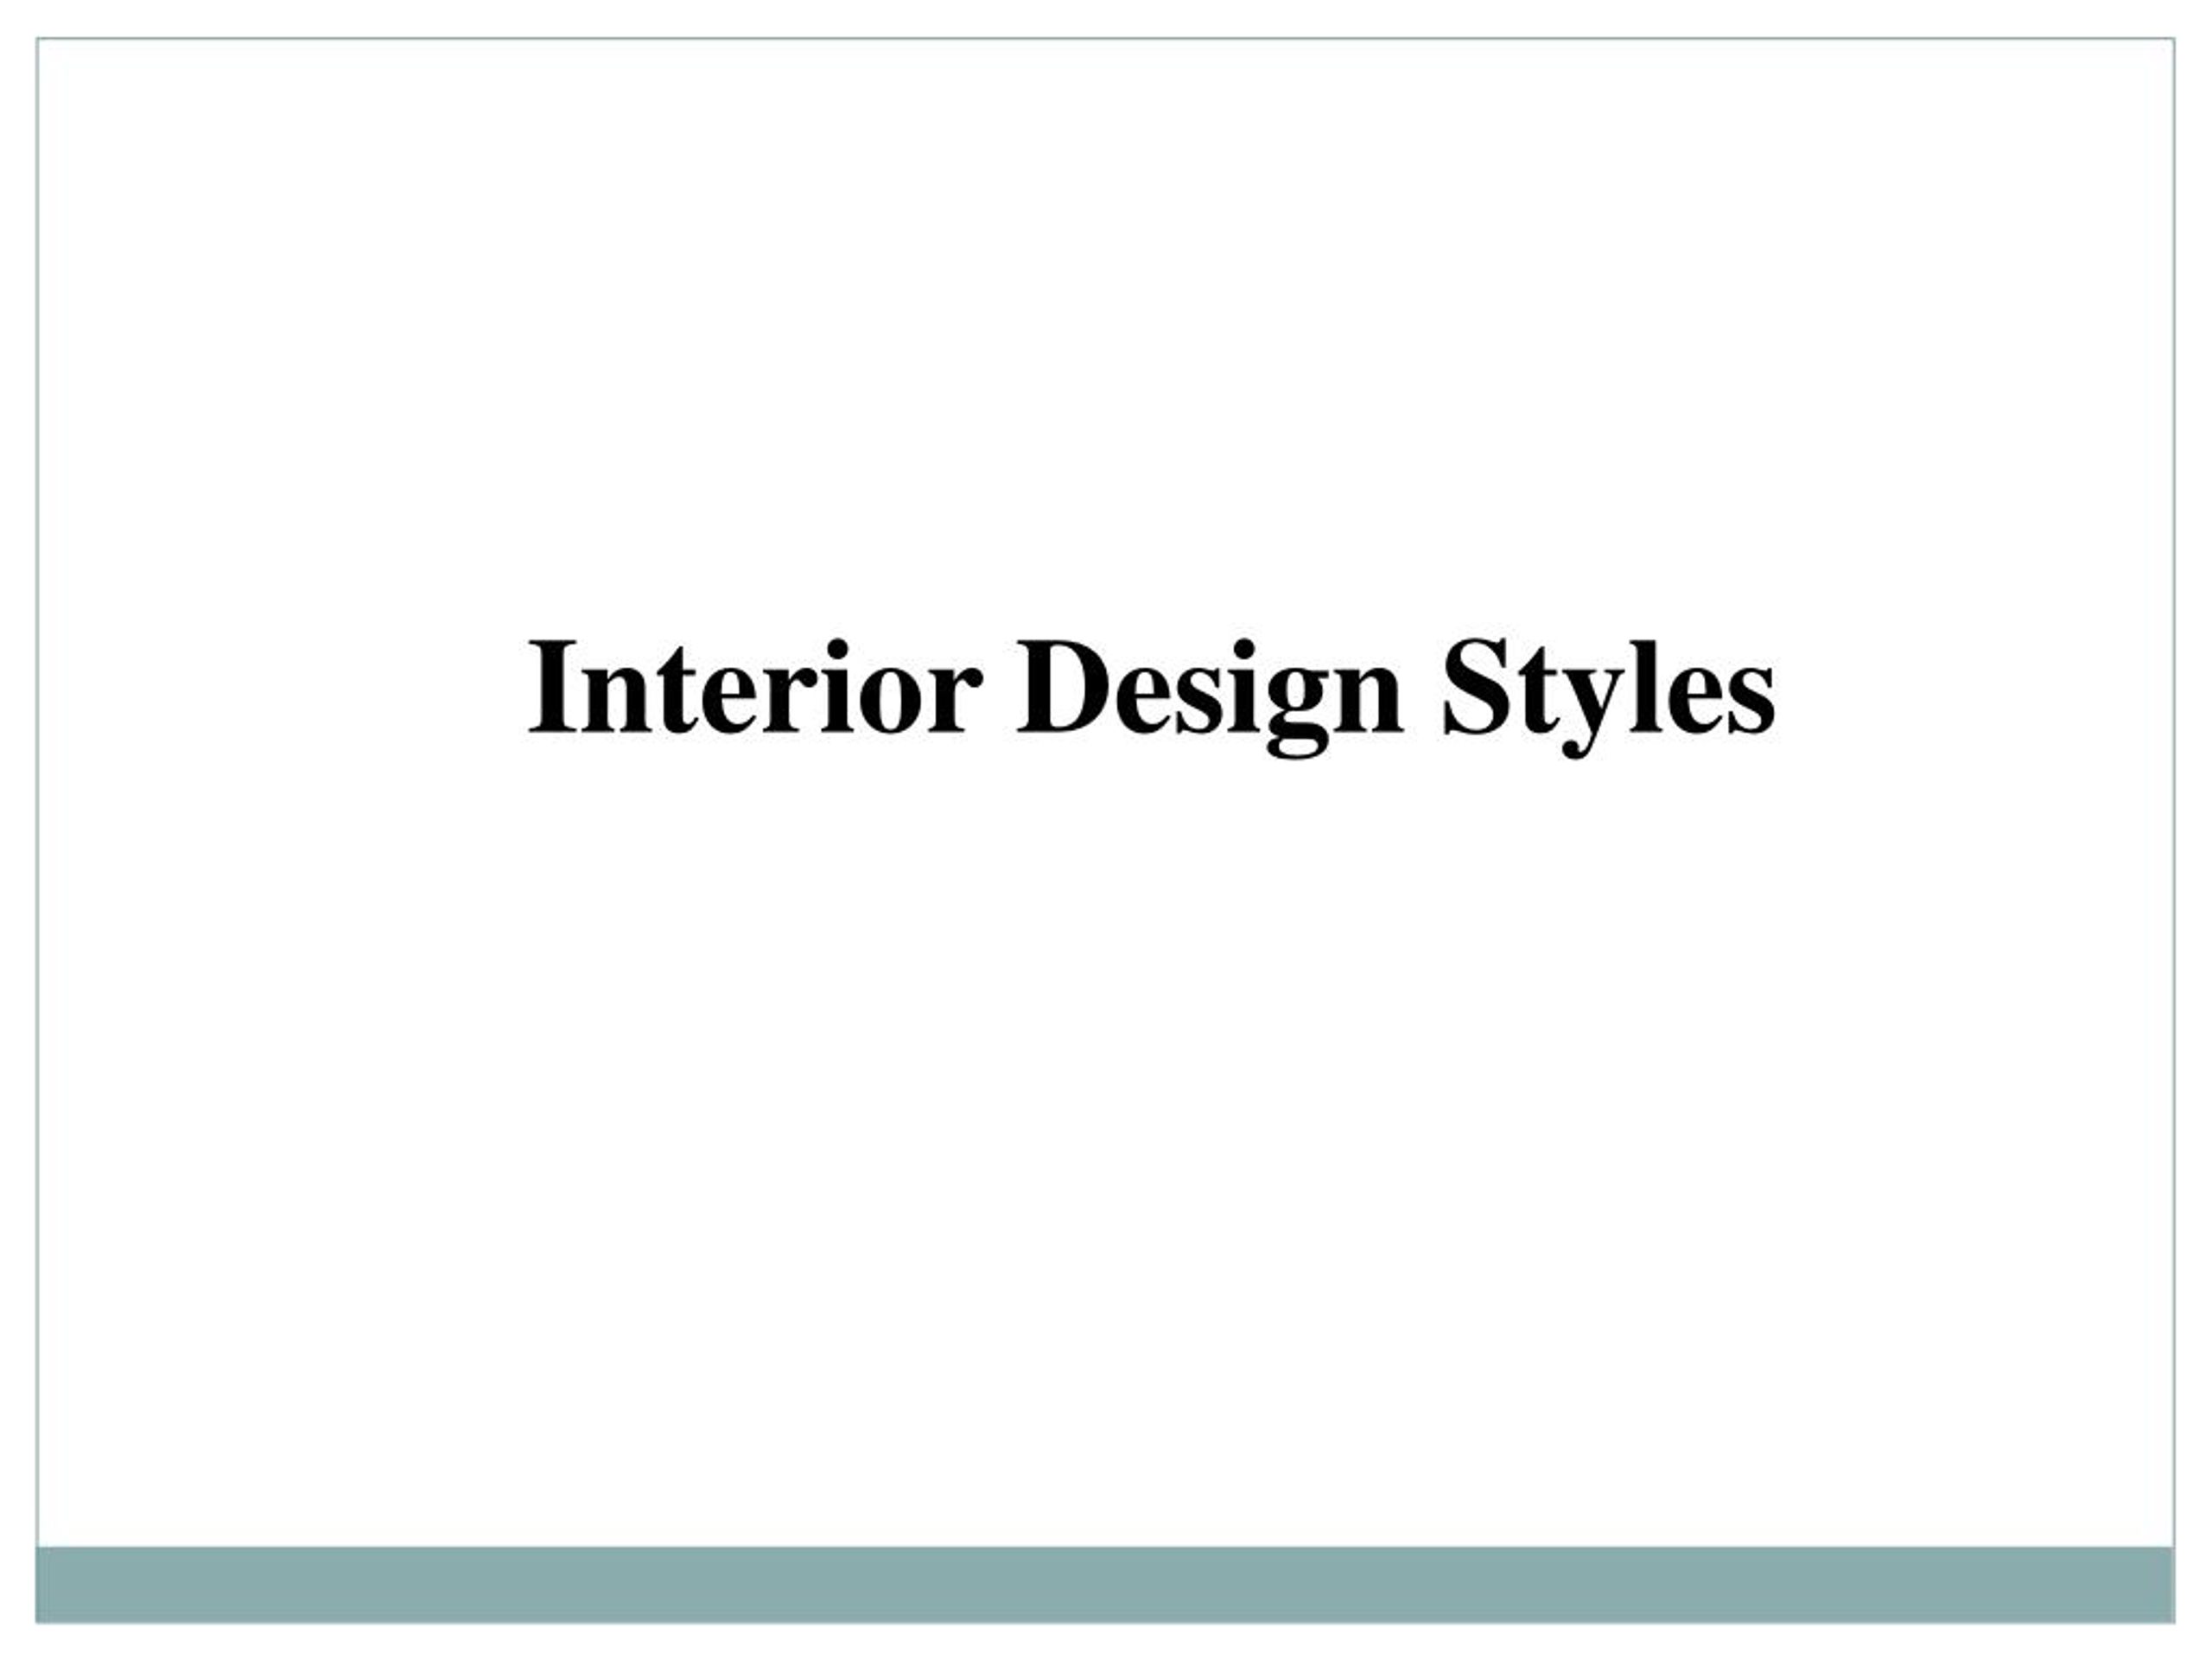 Ppt Interior Design Styles Powerpoint Presentation Free Download Id 7765055